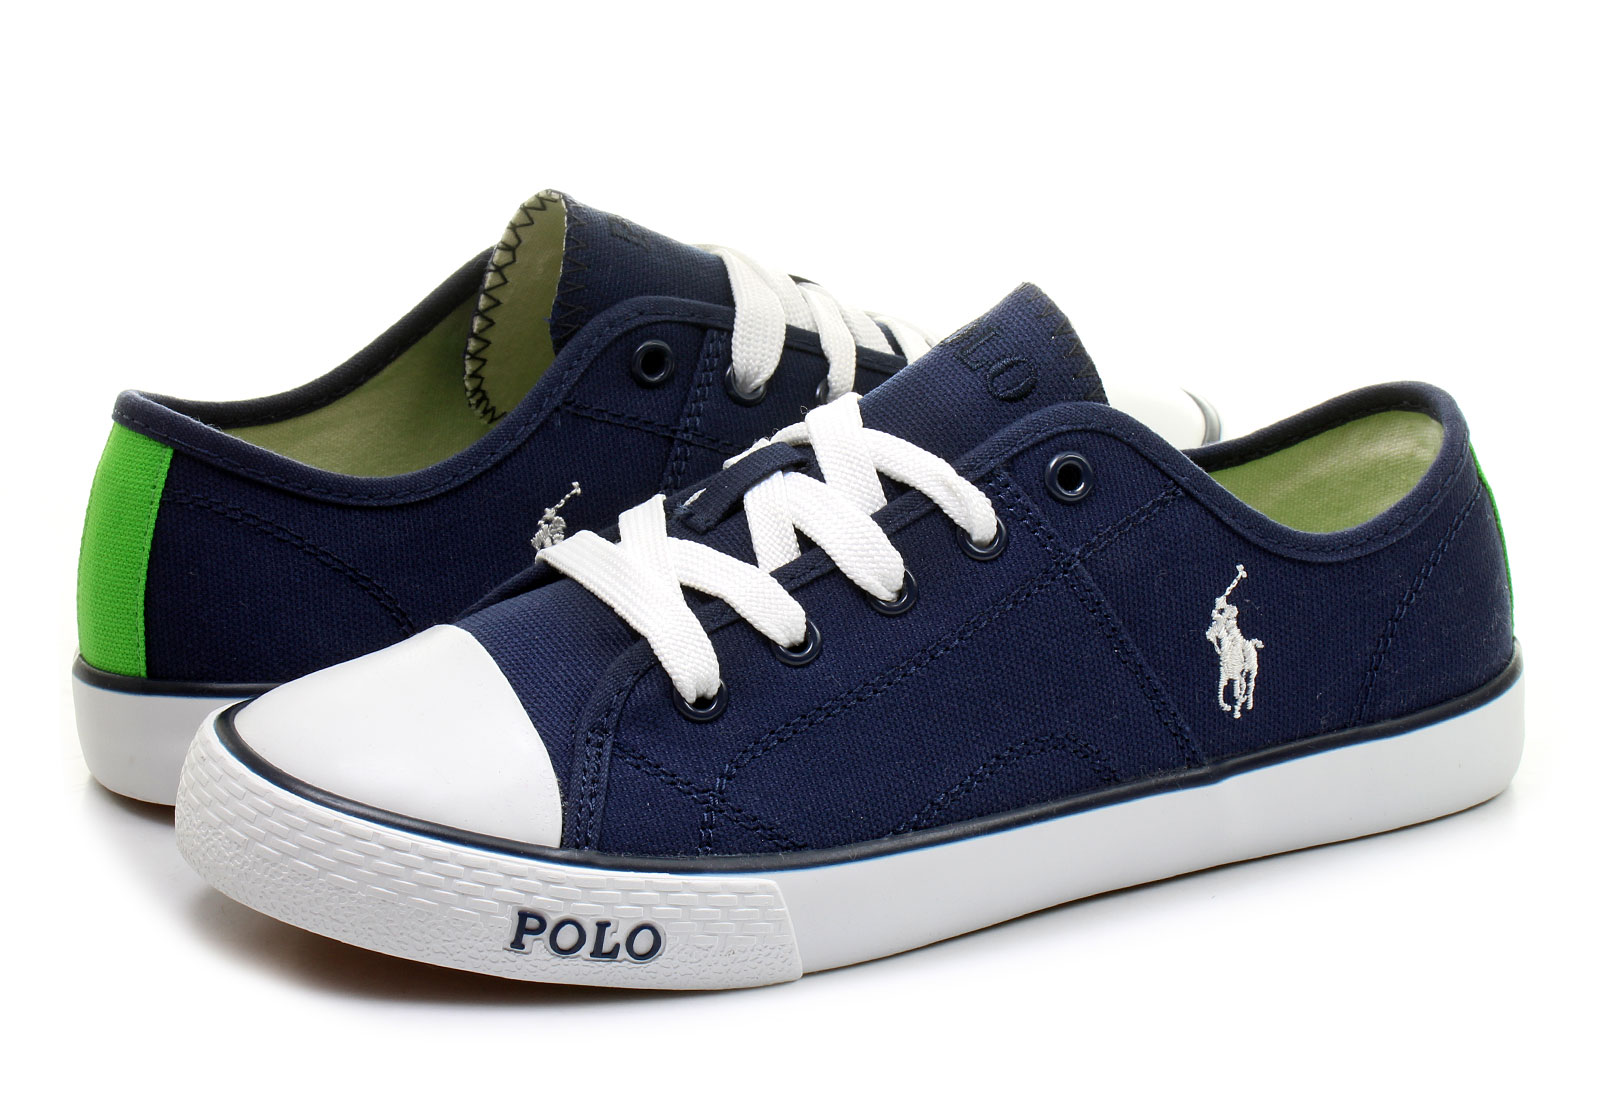 Polo Ralph Lauren Shoes - Daymond - 992918-j-nvy - Online shop for ...